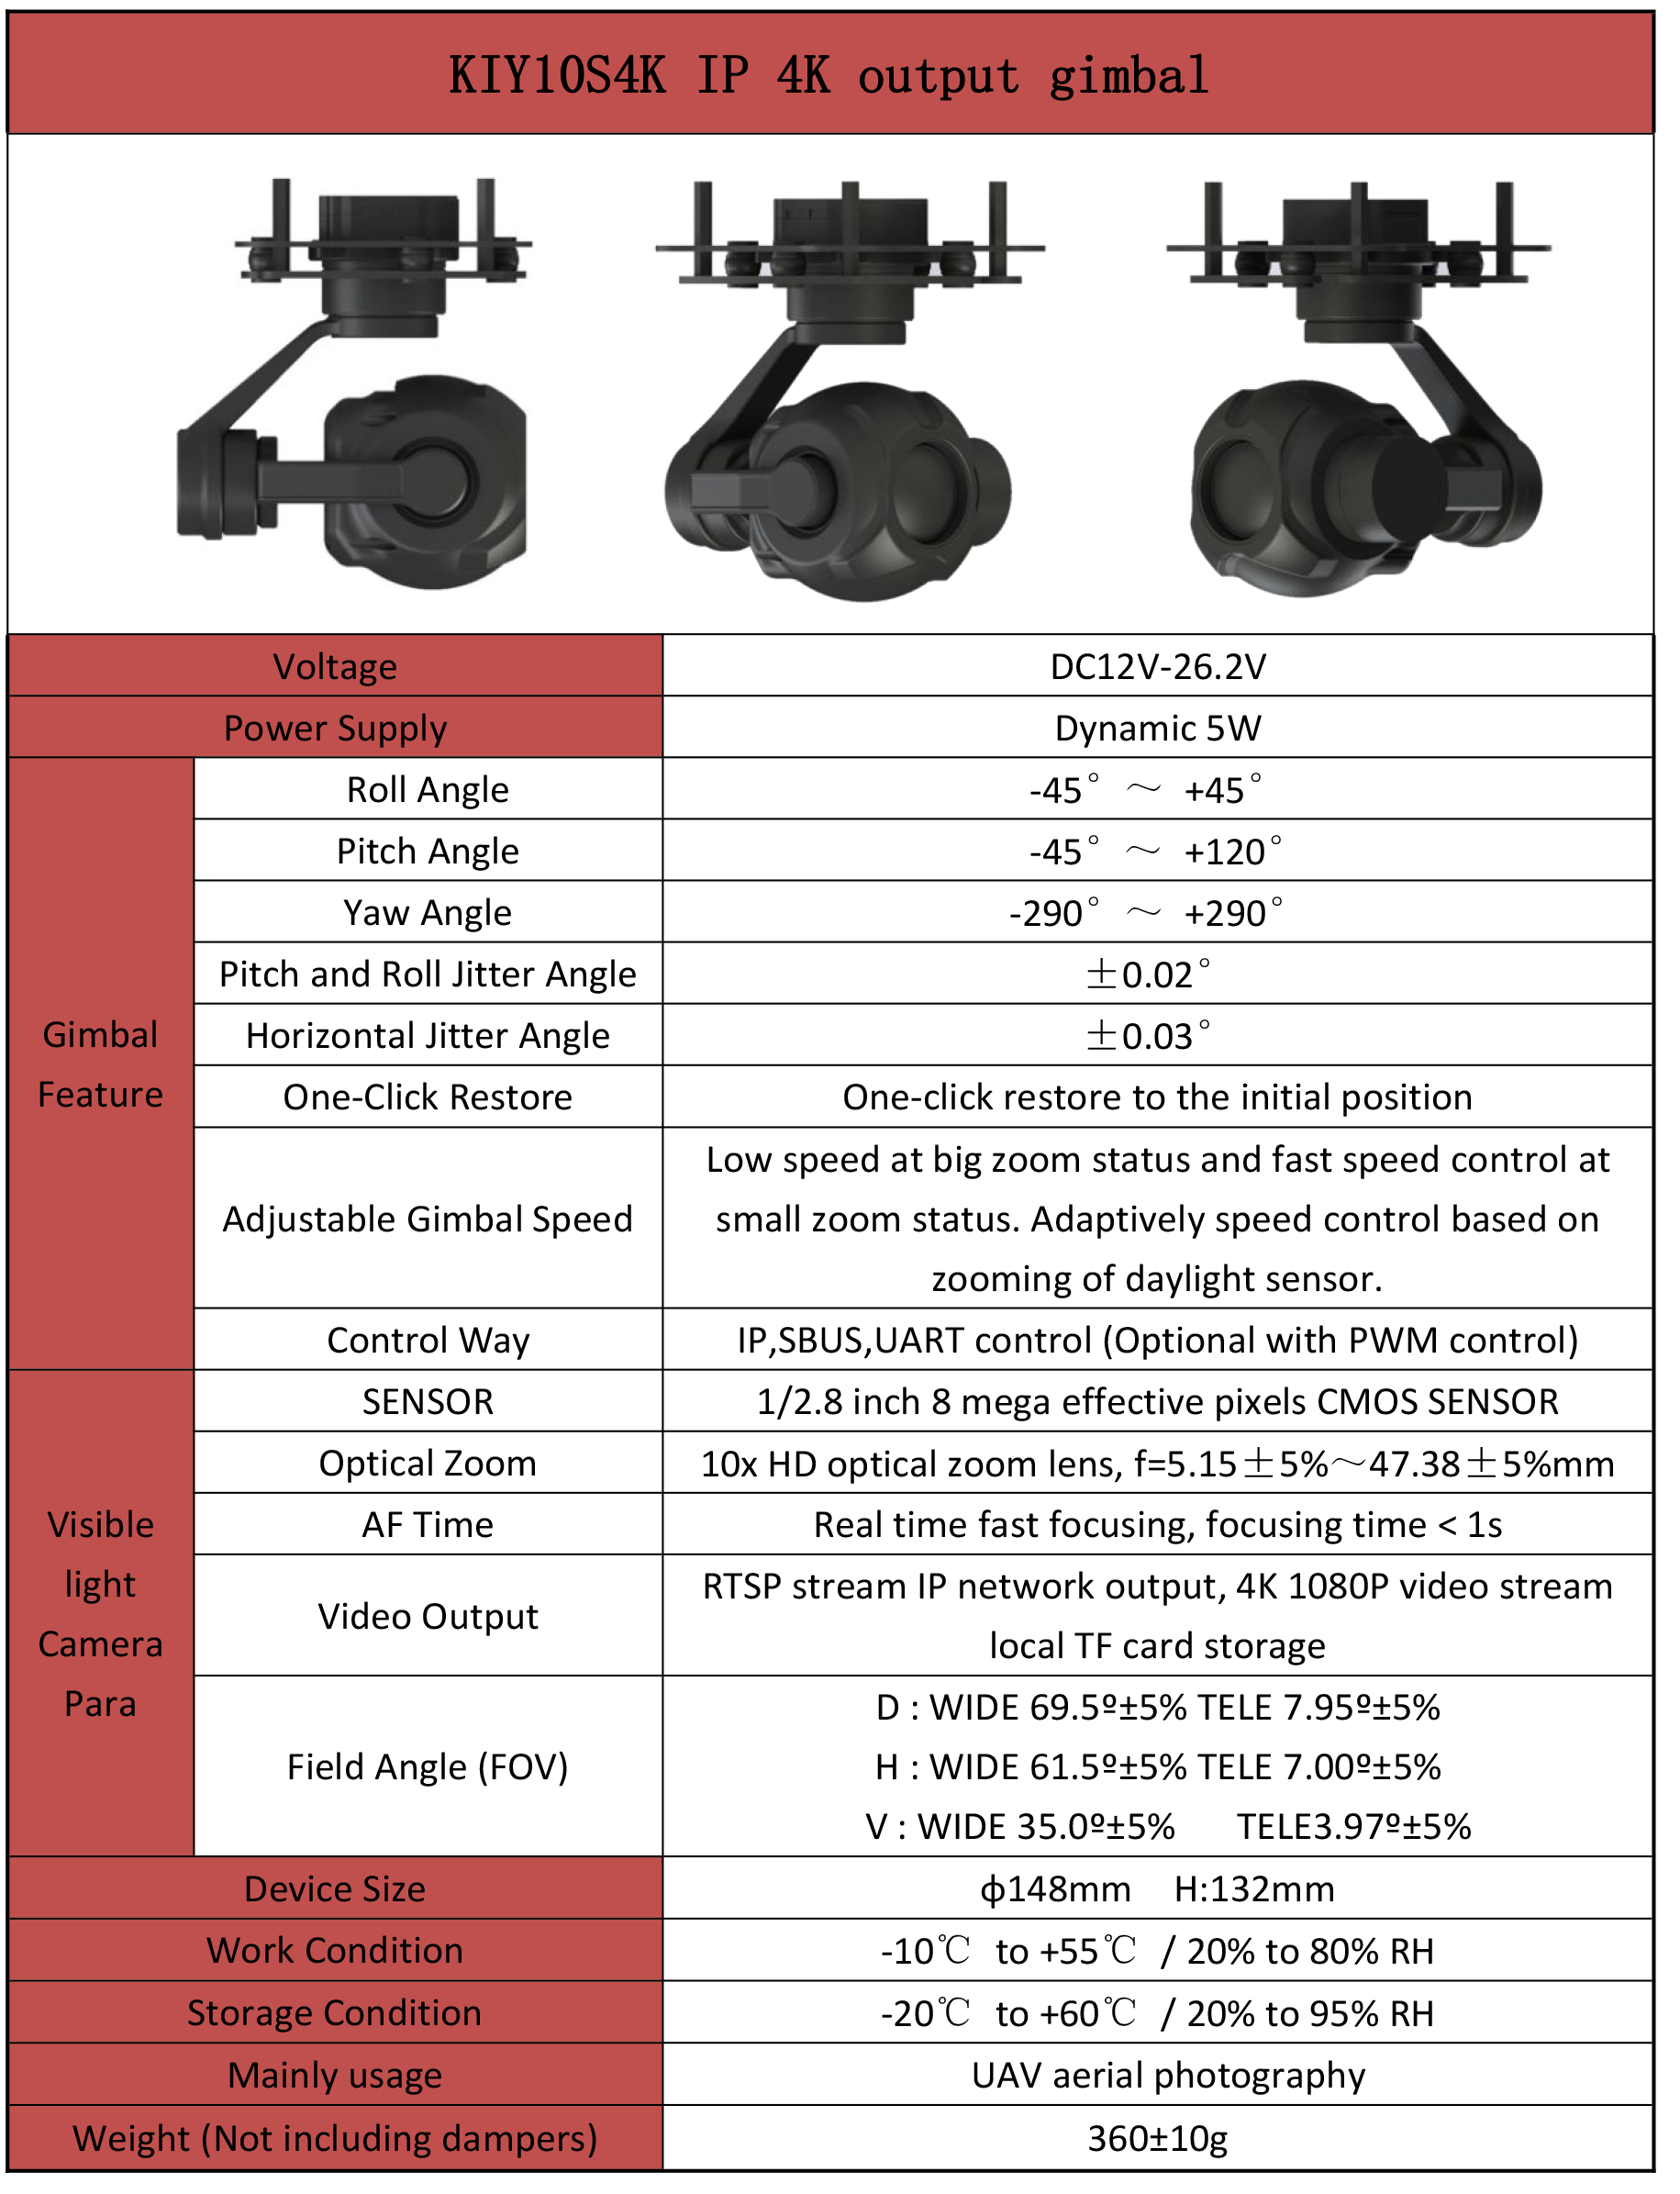 TOPOTEK KIY10S4K Camera Gimbal, Compact gimbal for drones and UAVs with 4K resolution, 10x optical zoom, and 3-axis PTZ control.